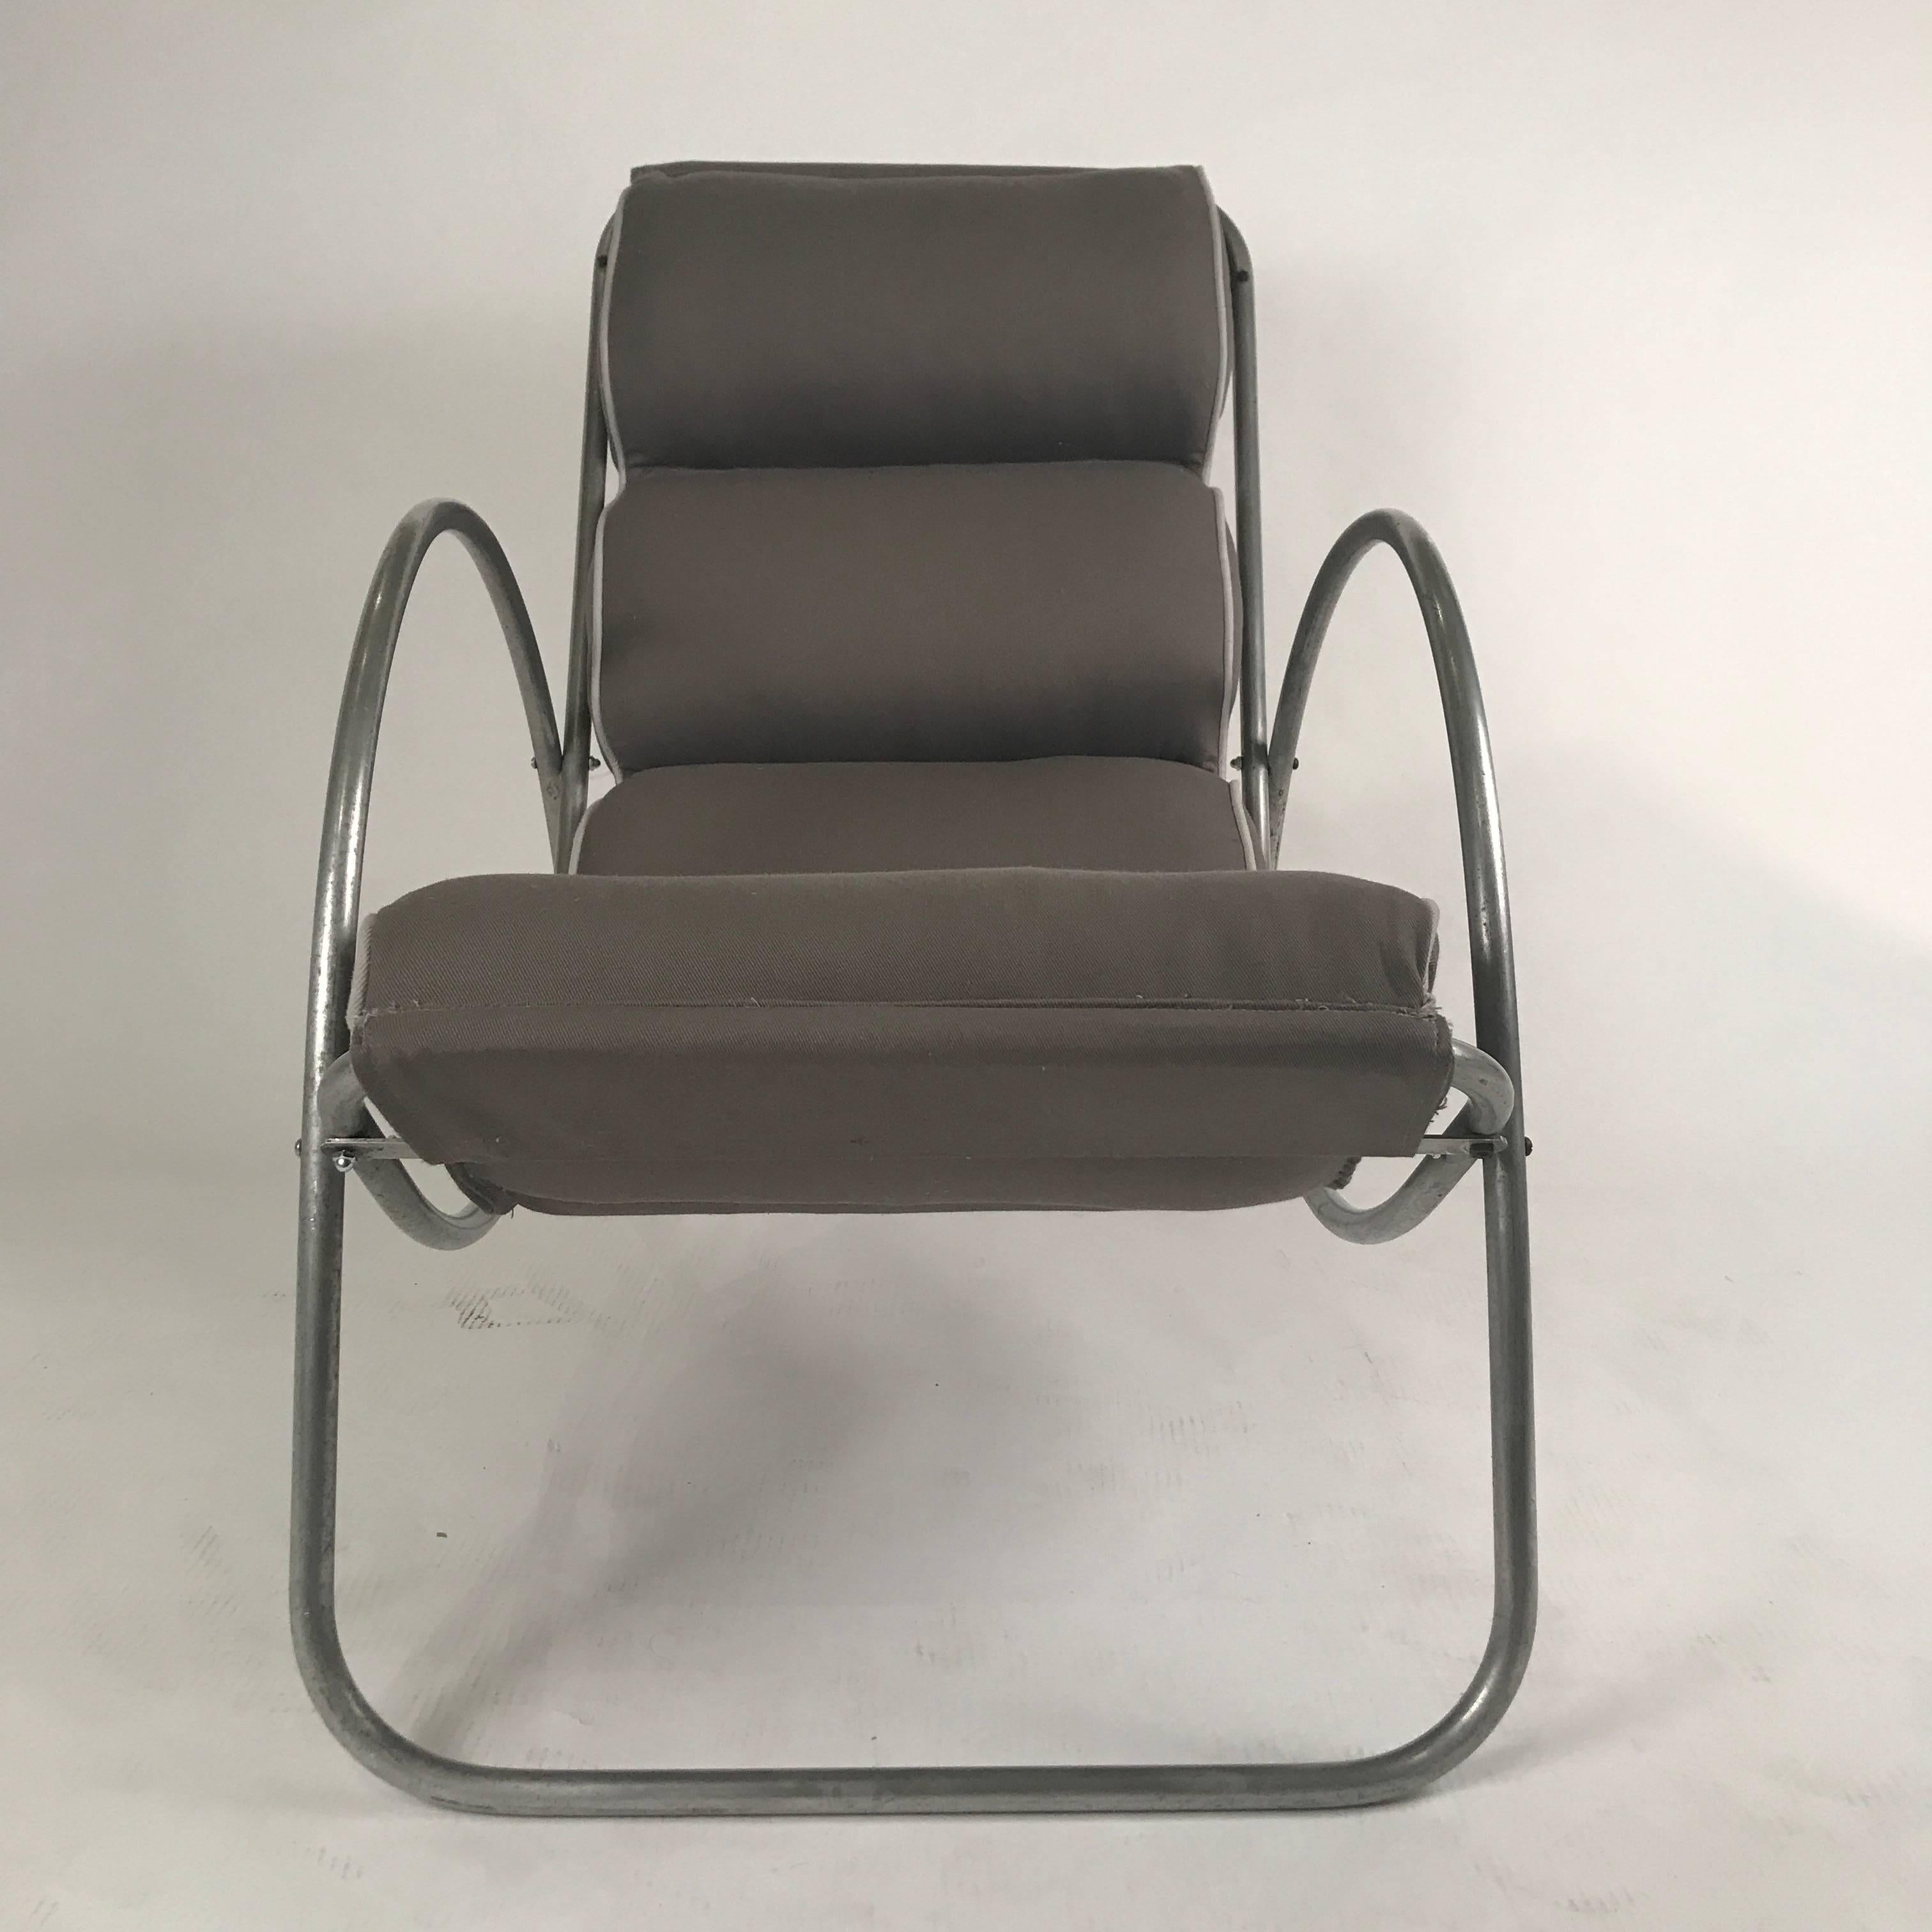 Aluminum Pair of Halliburton Lounge Chairs, 1930s Art Deco Machine Age Modernist Design